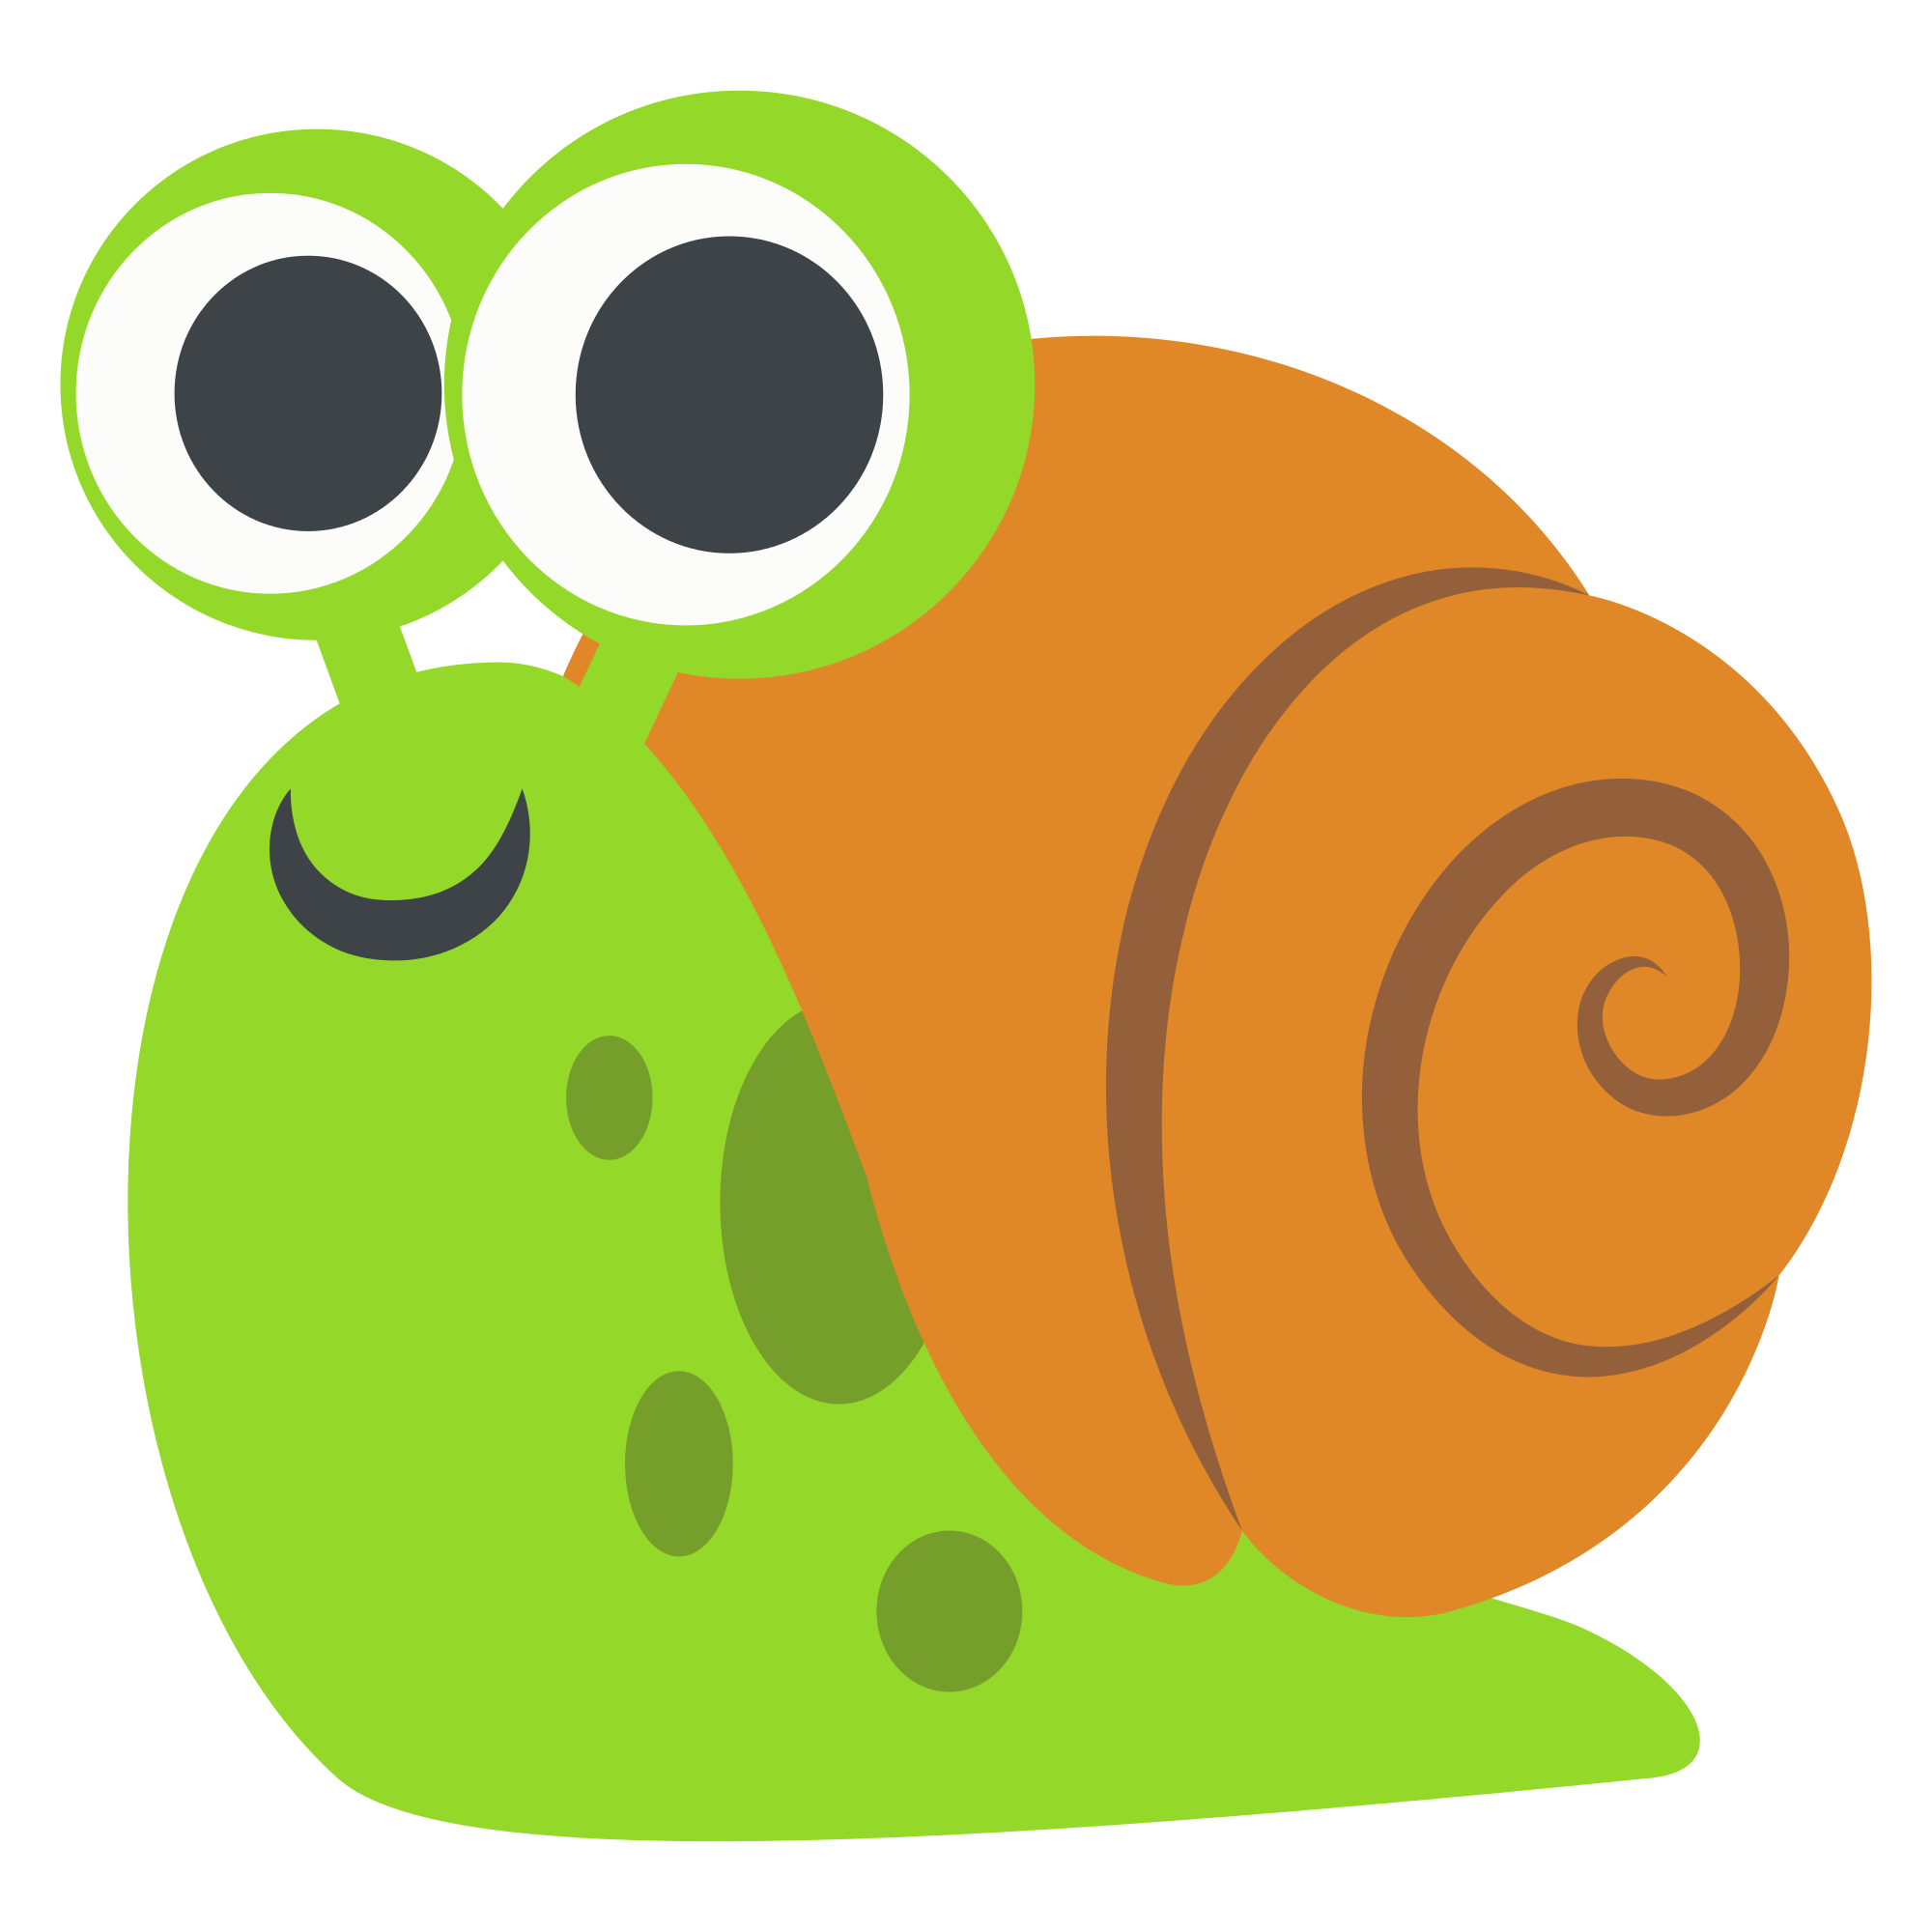 Sea Slug svg #17, Download drawings